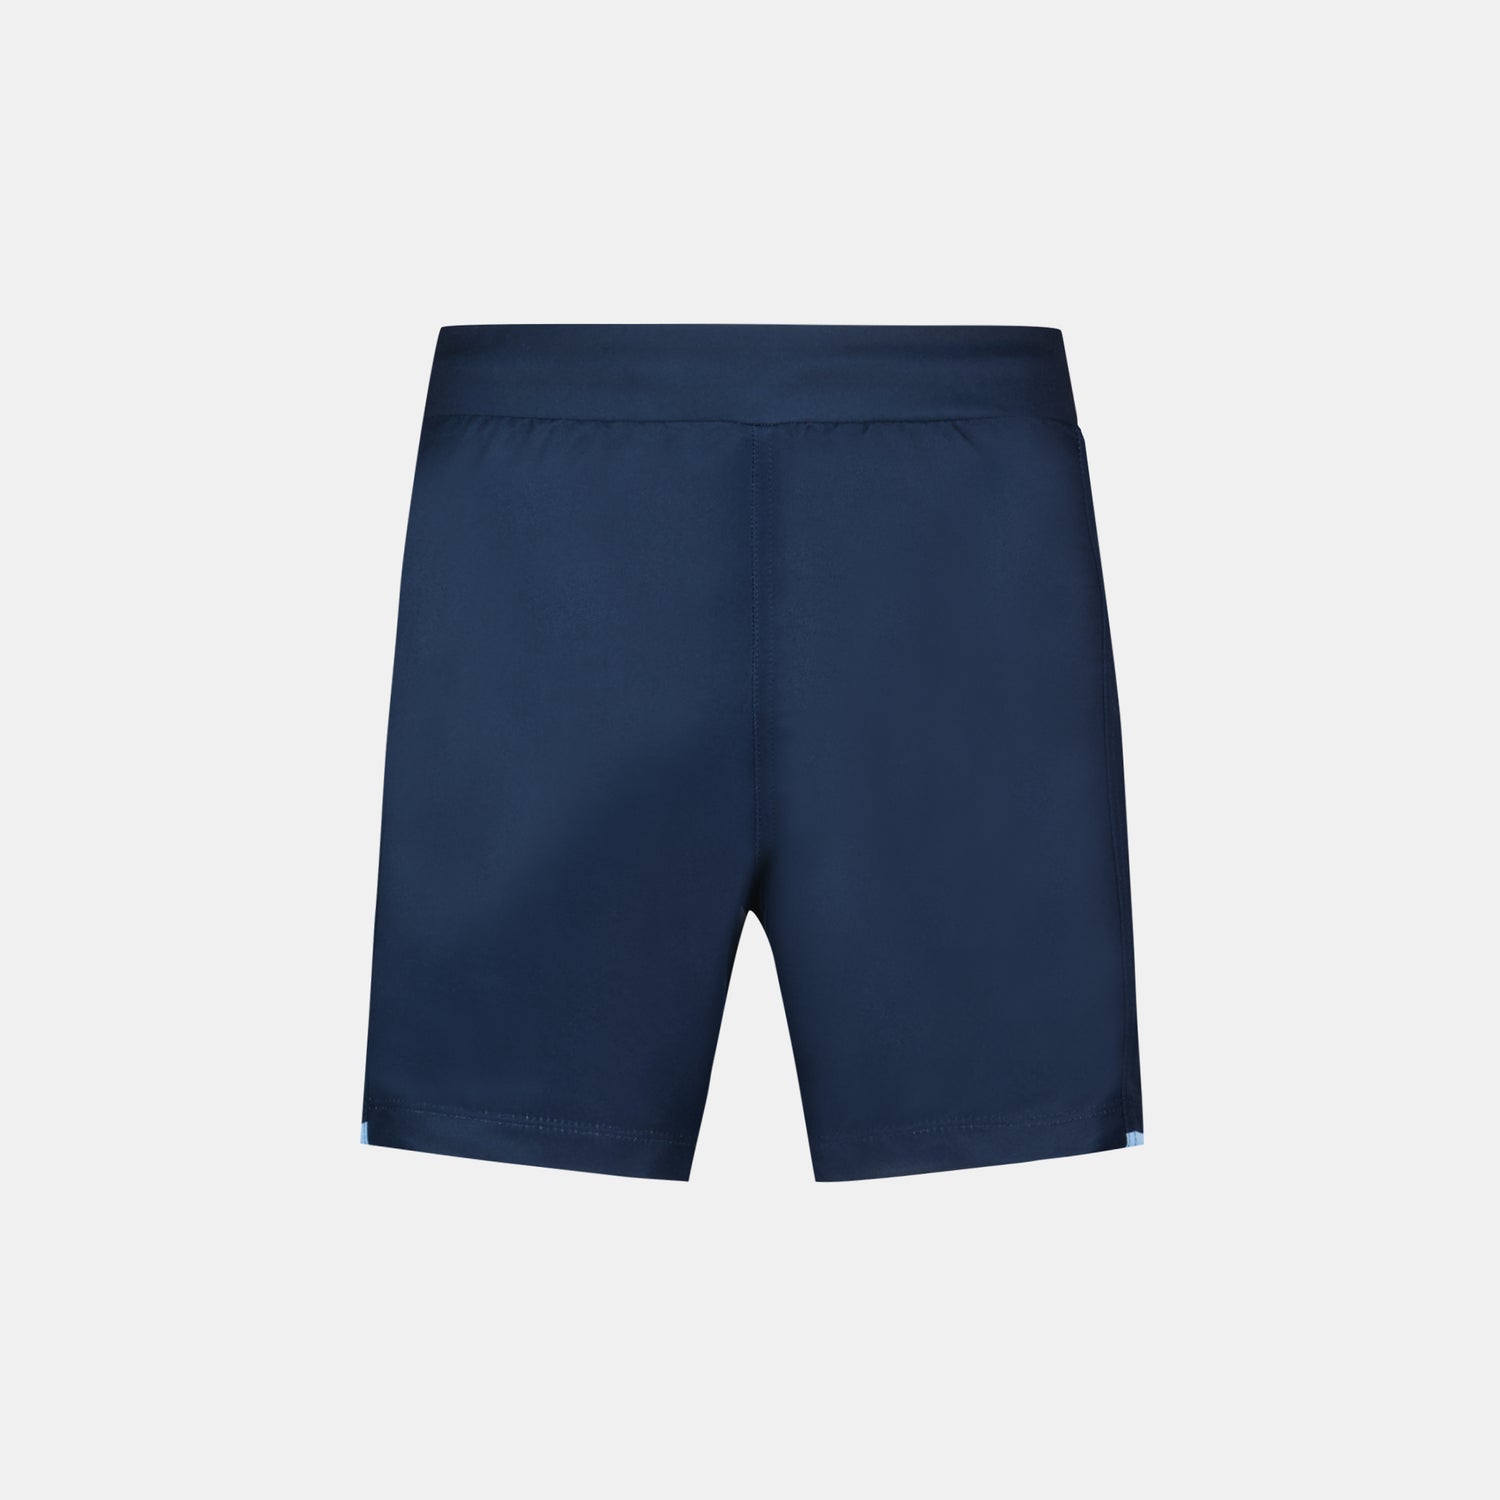 2320334-AB REPLICA Short Enfant blue navy  | Shorts für Kinder